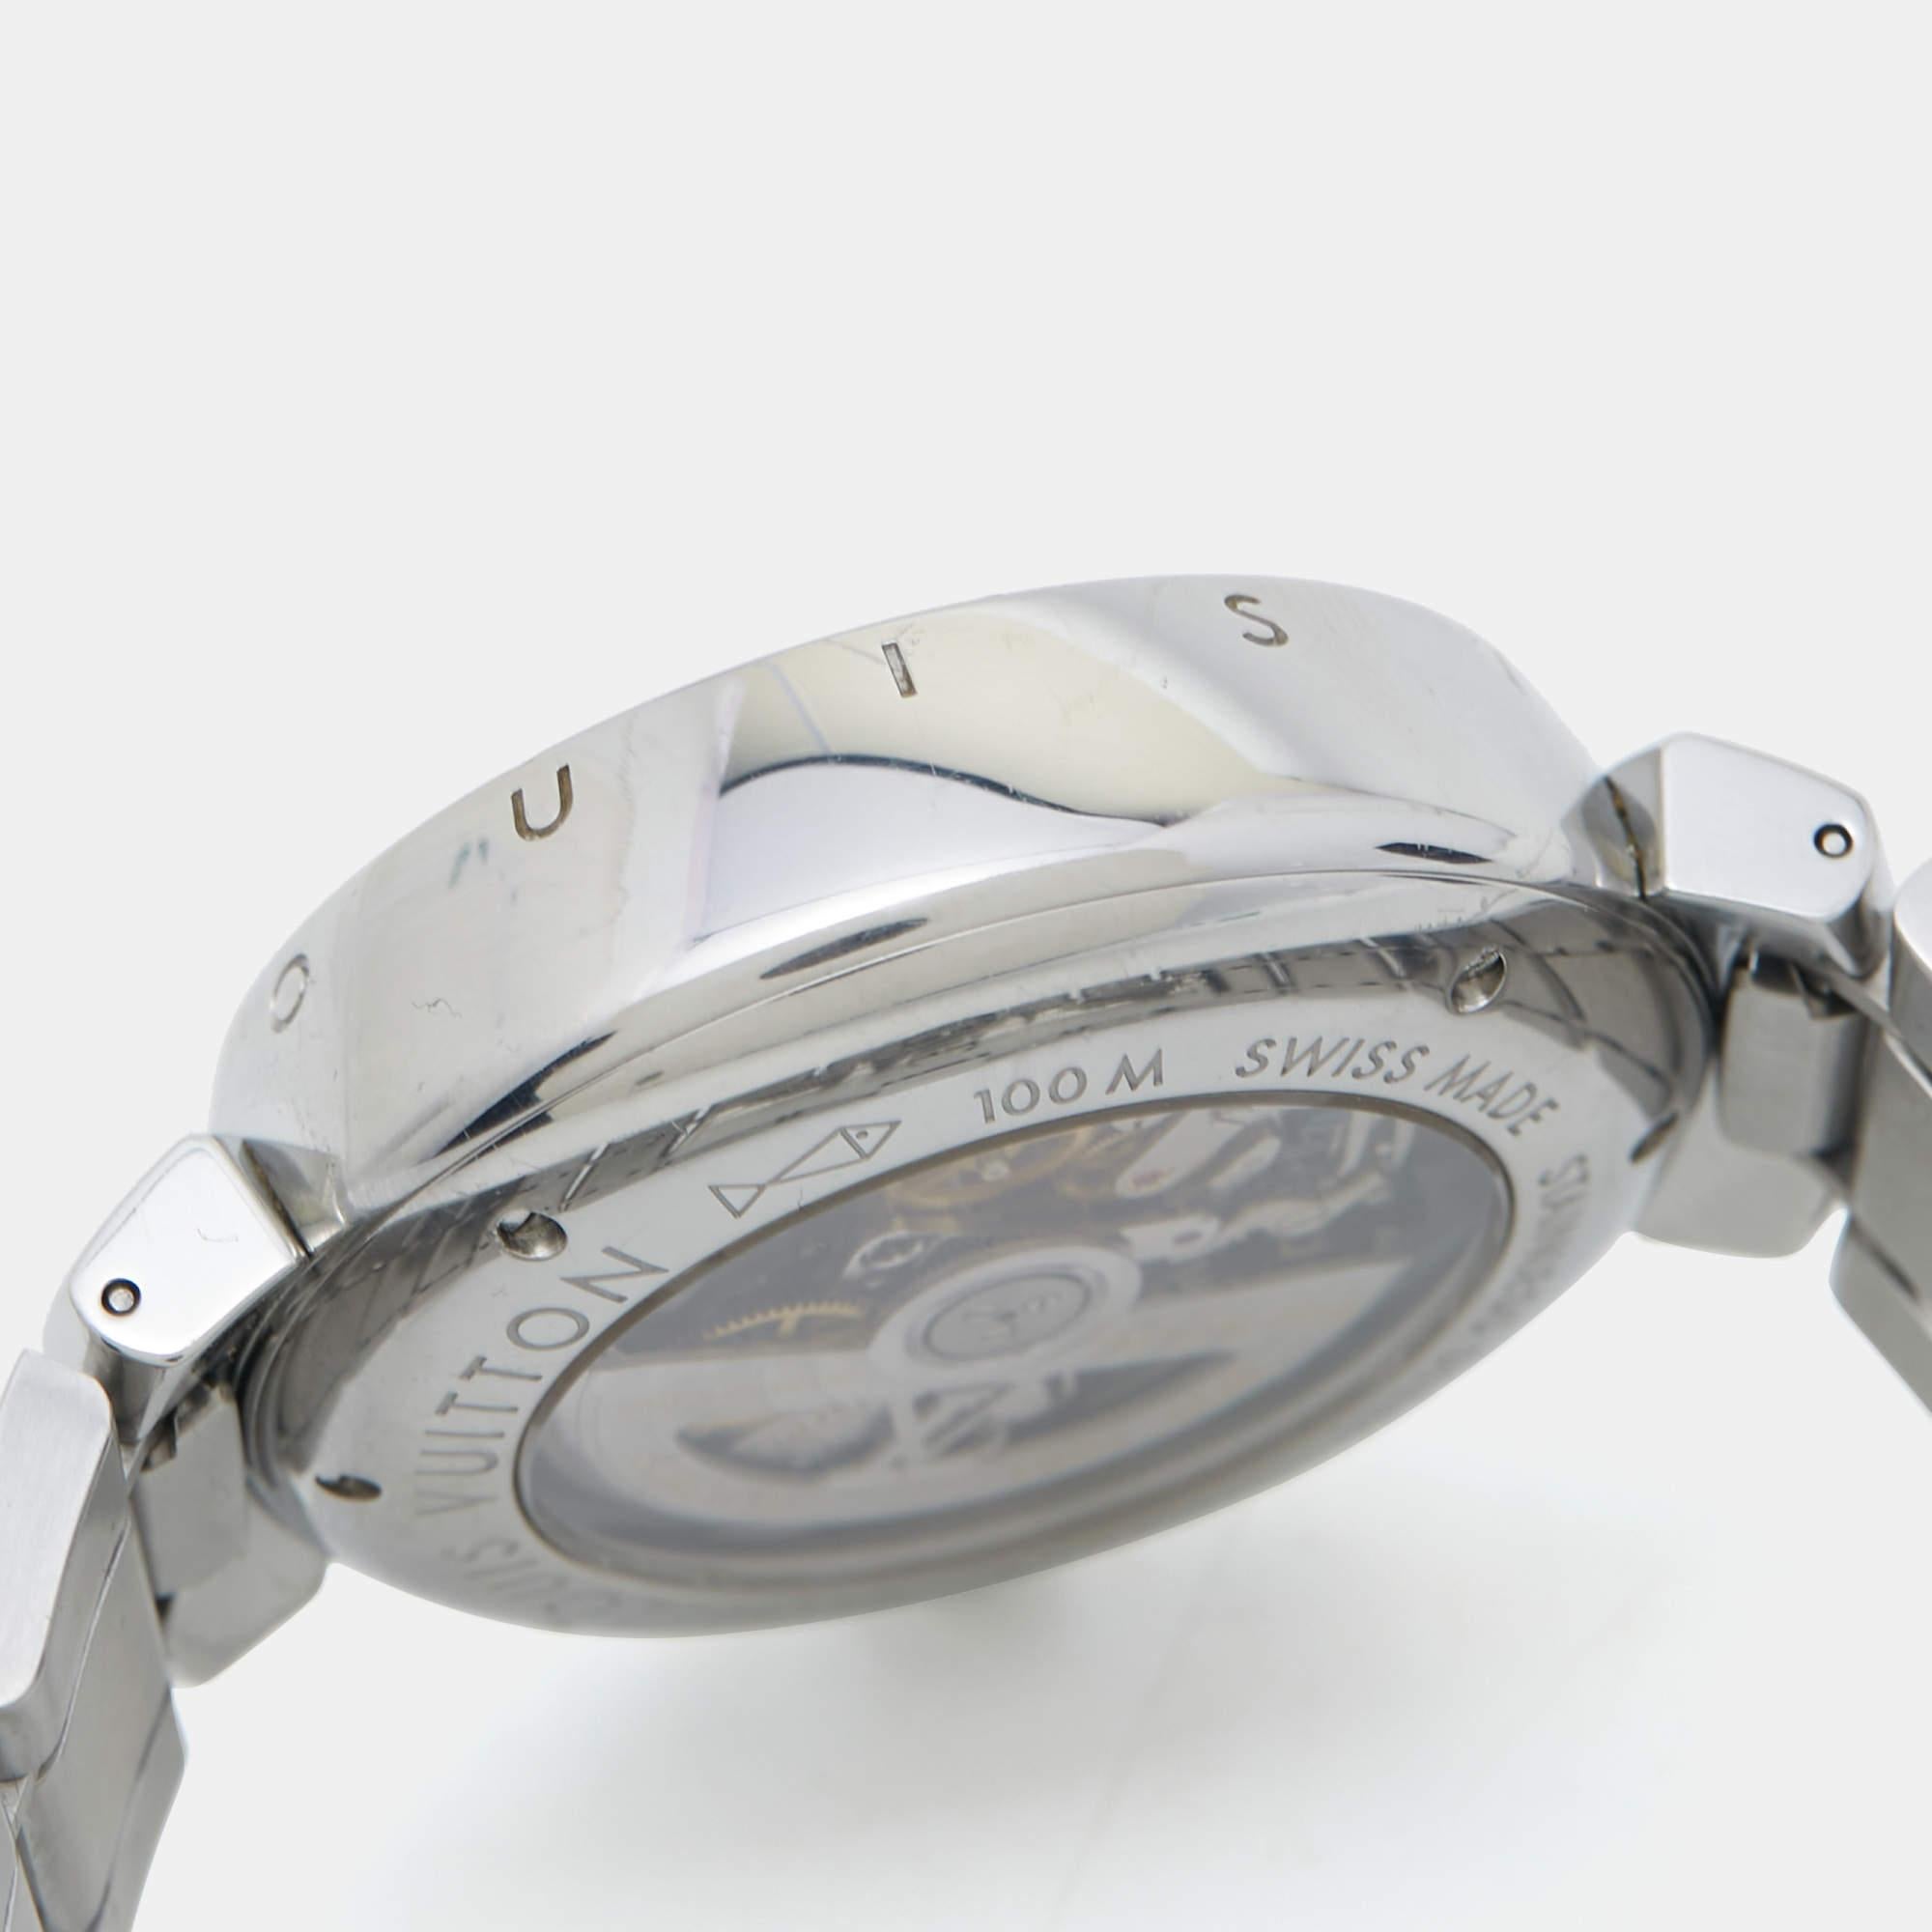 louis vuitton chronometer watch price